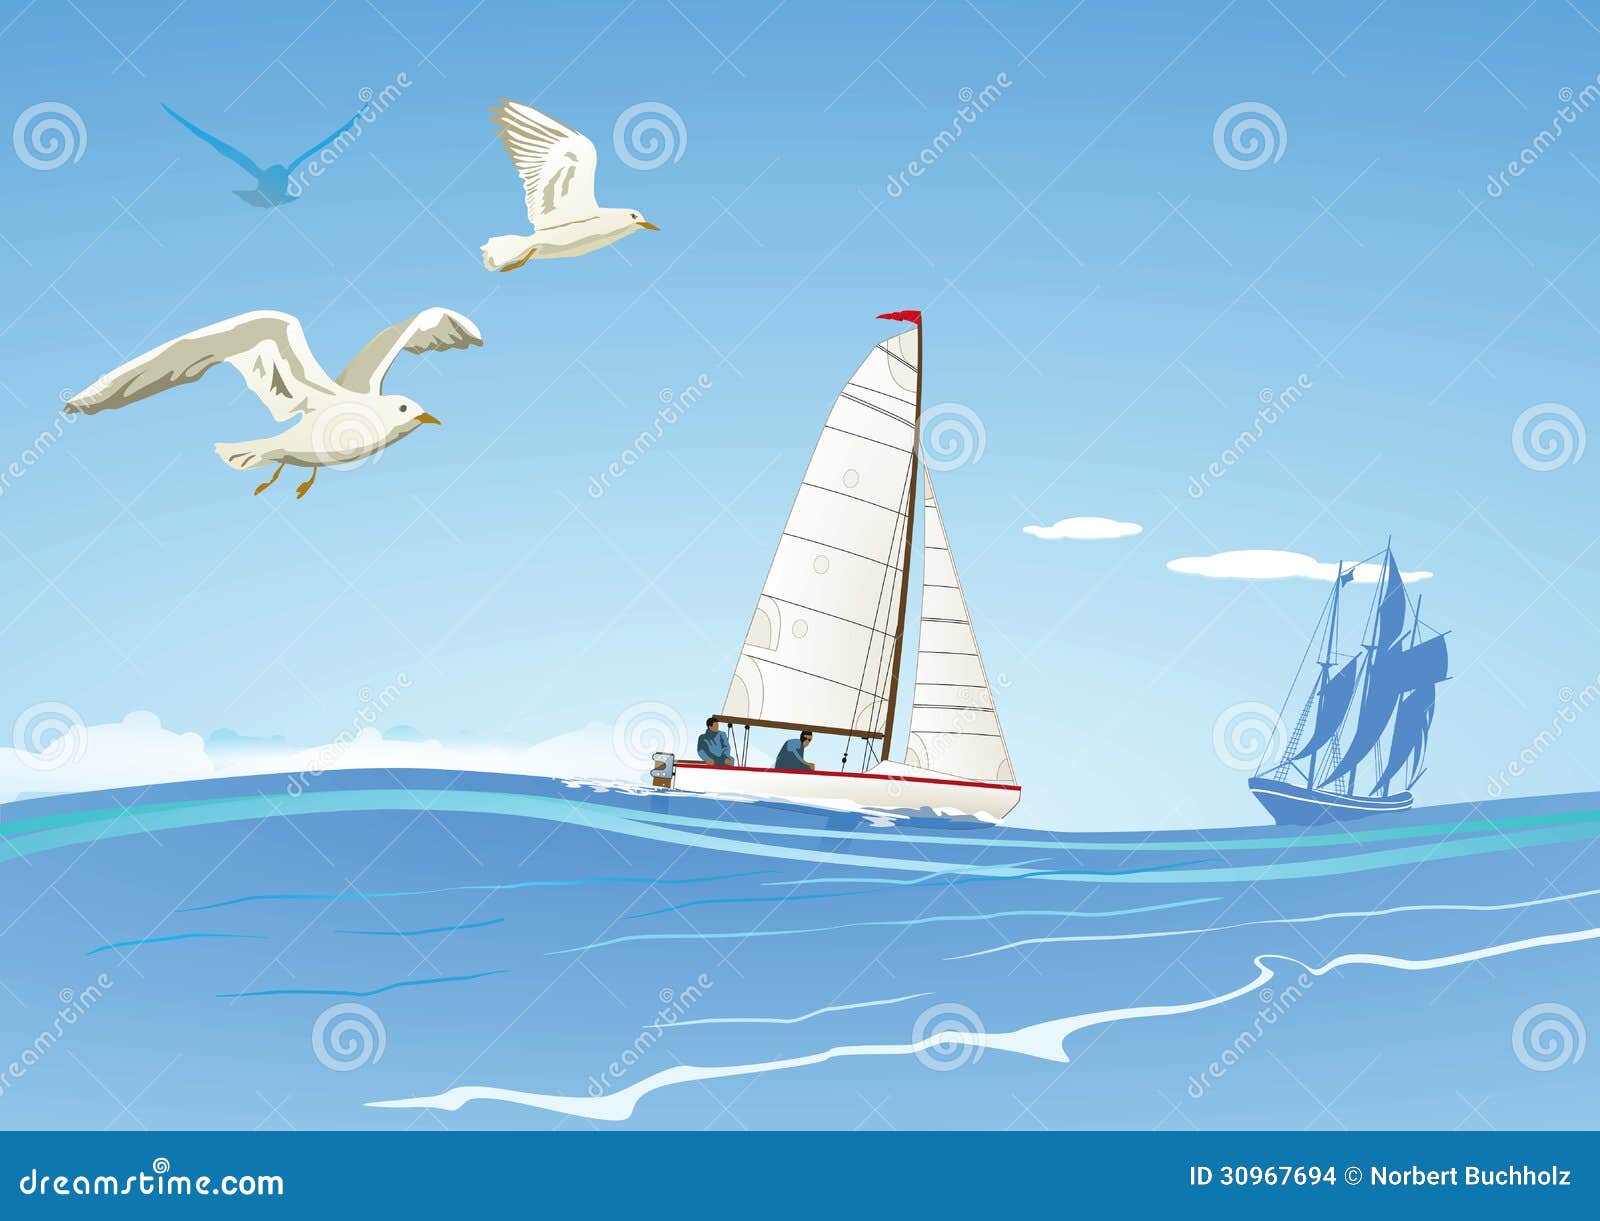 sailboats and seagulls